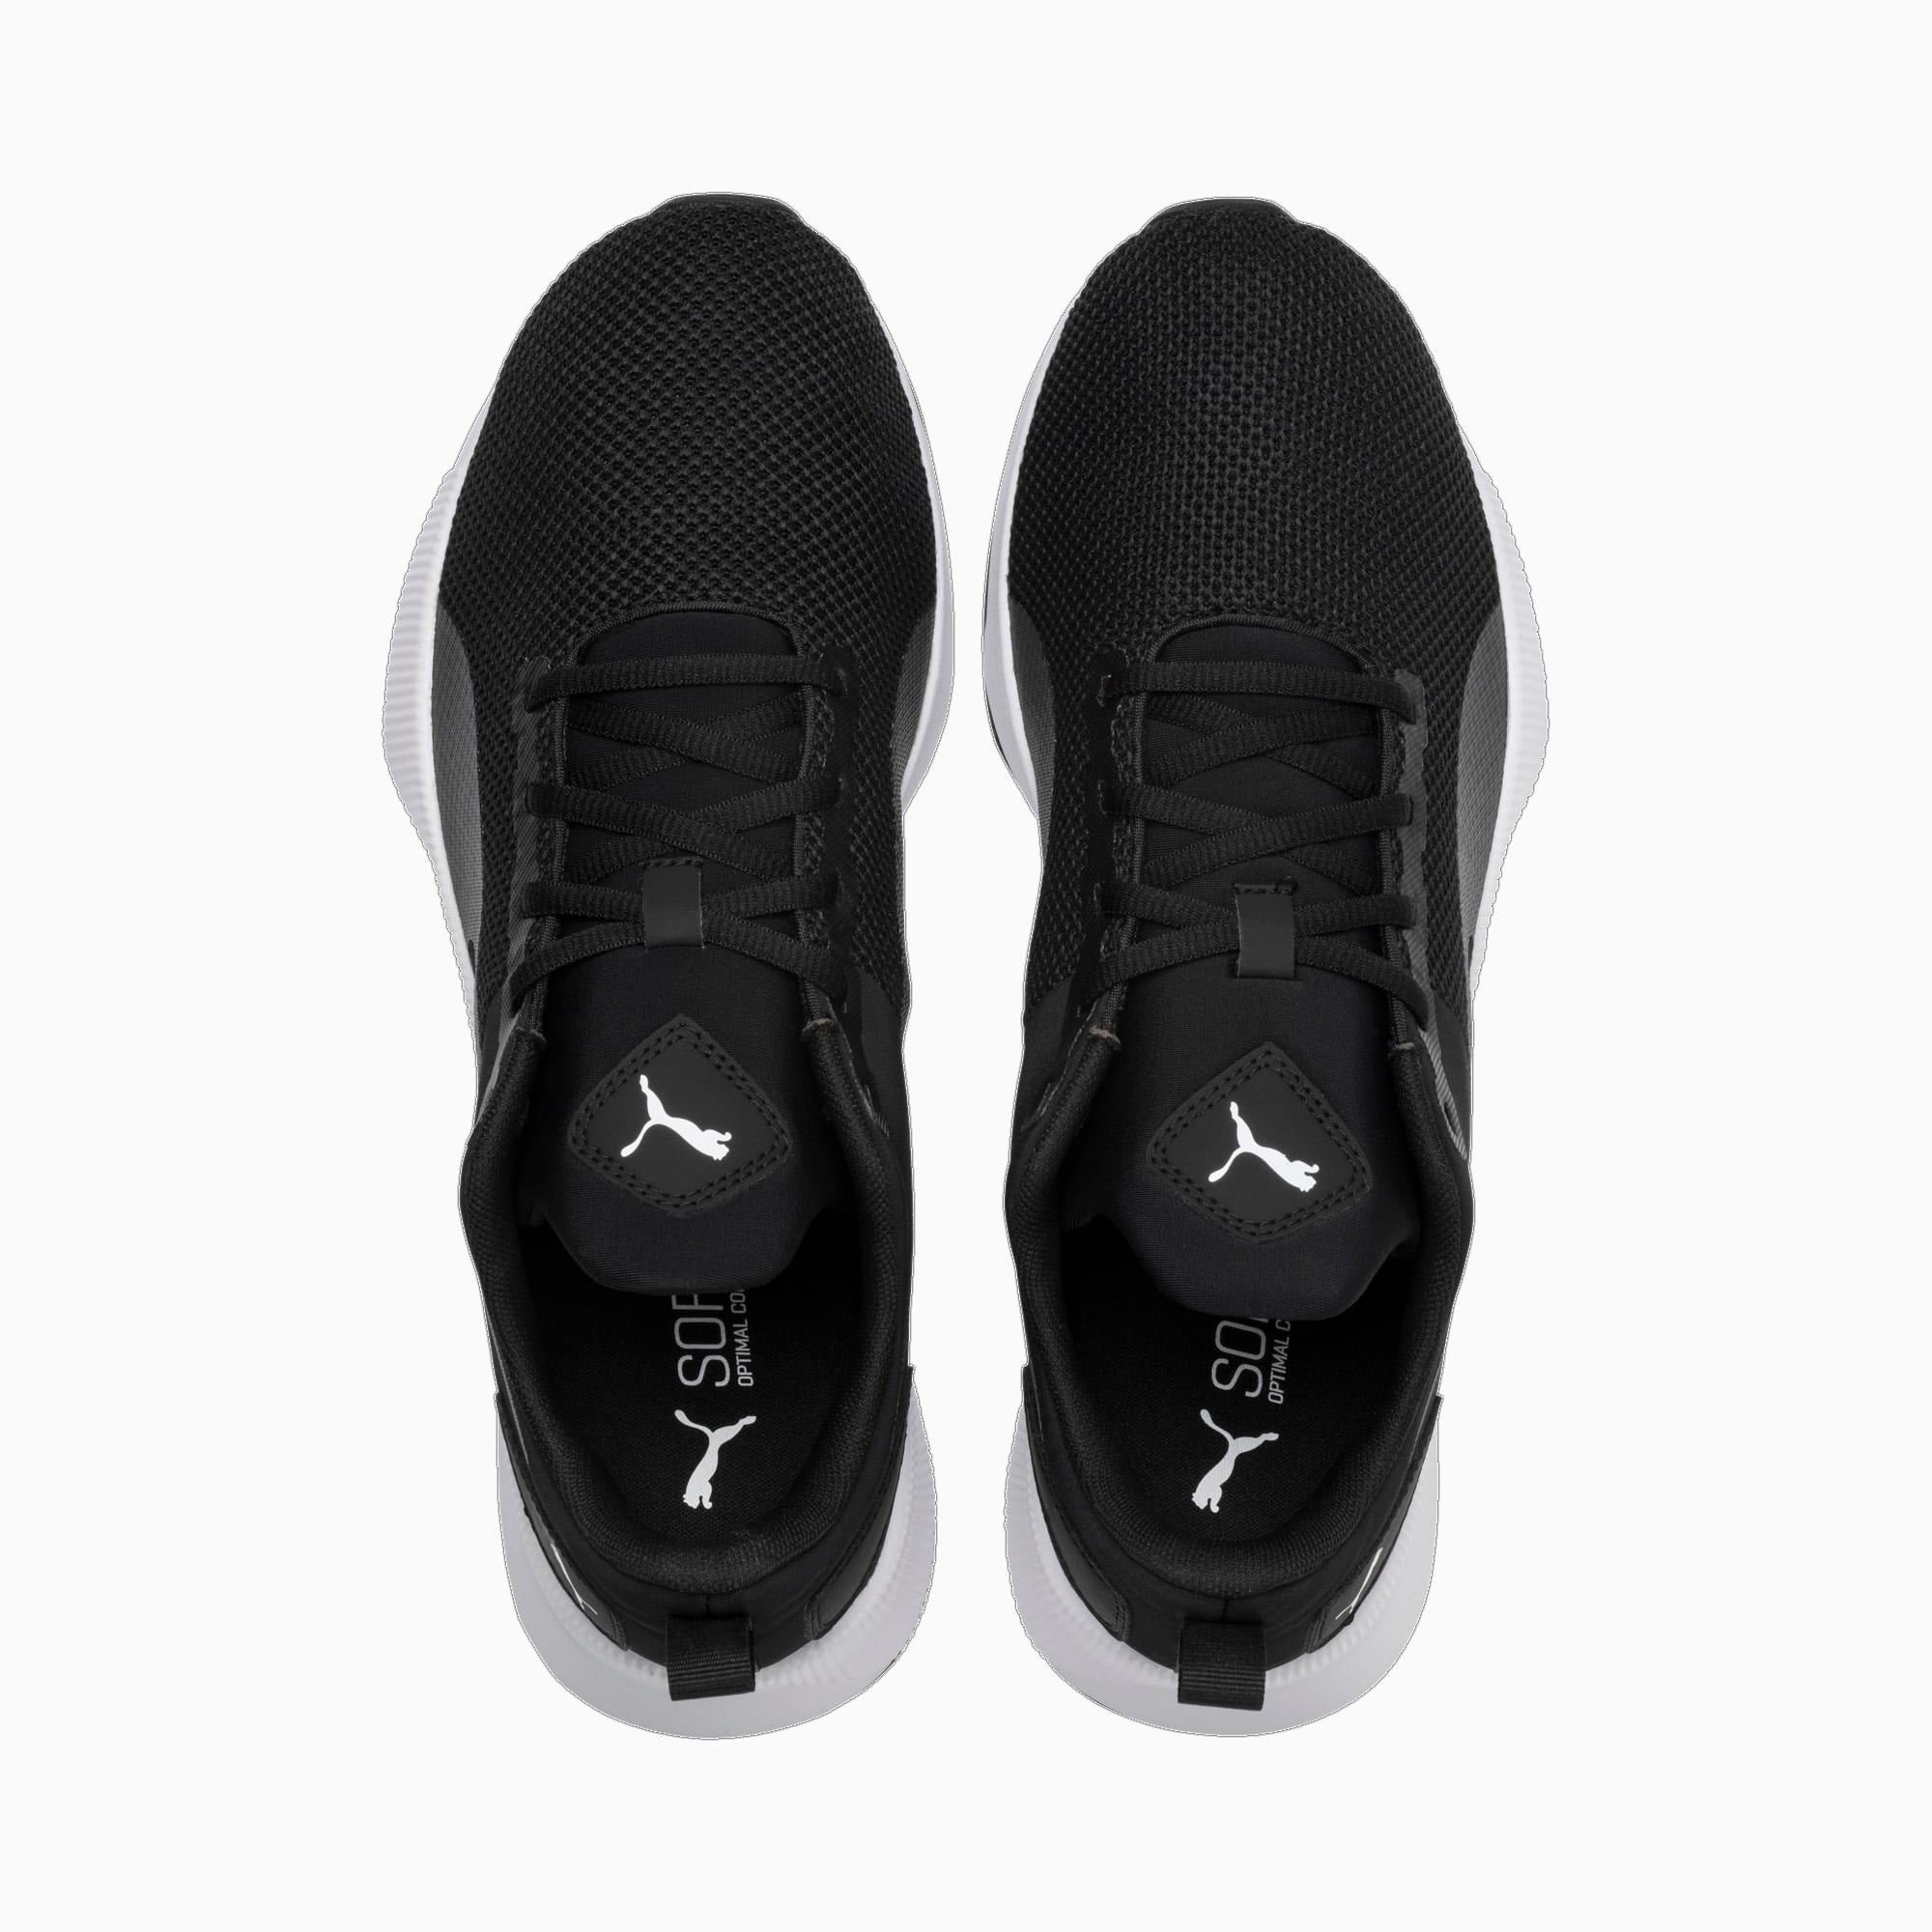 Women's PUMA Flyer Running Shoe Sneakers, Black/White, Size 35,5, Shoes